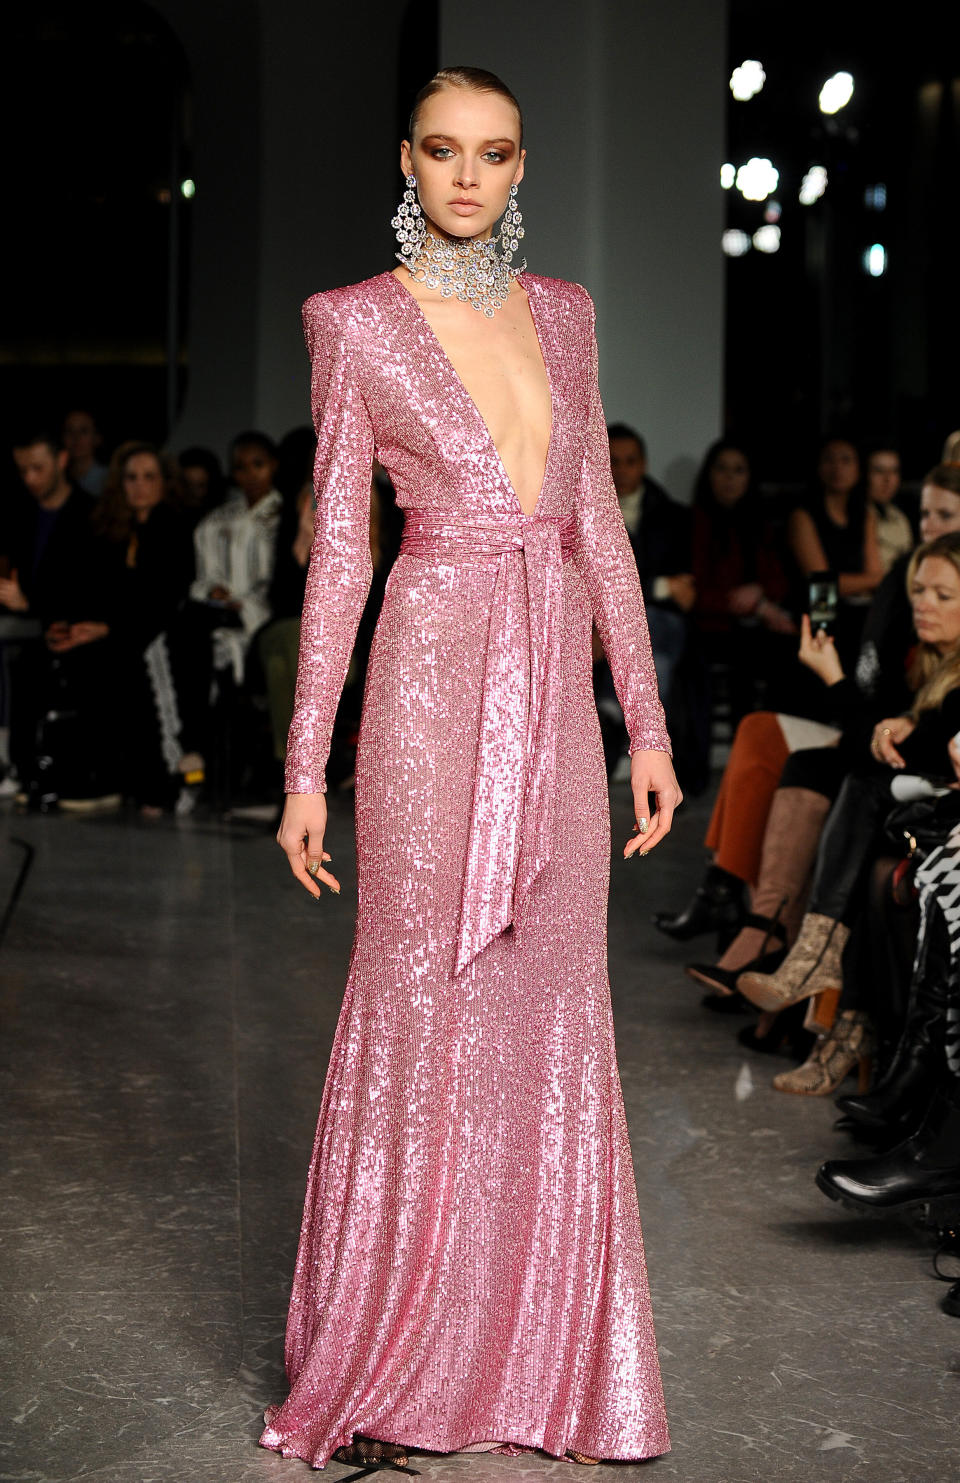 A model walks the runway during the Naeem Khan show at New York Fashion Week on Feb. 11.&nbsp;